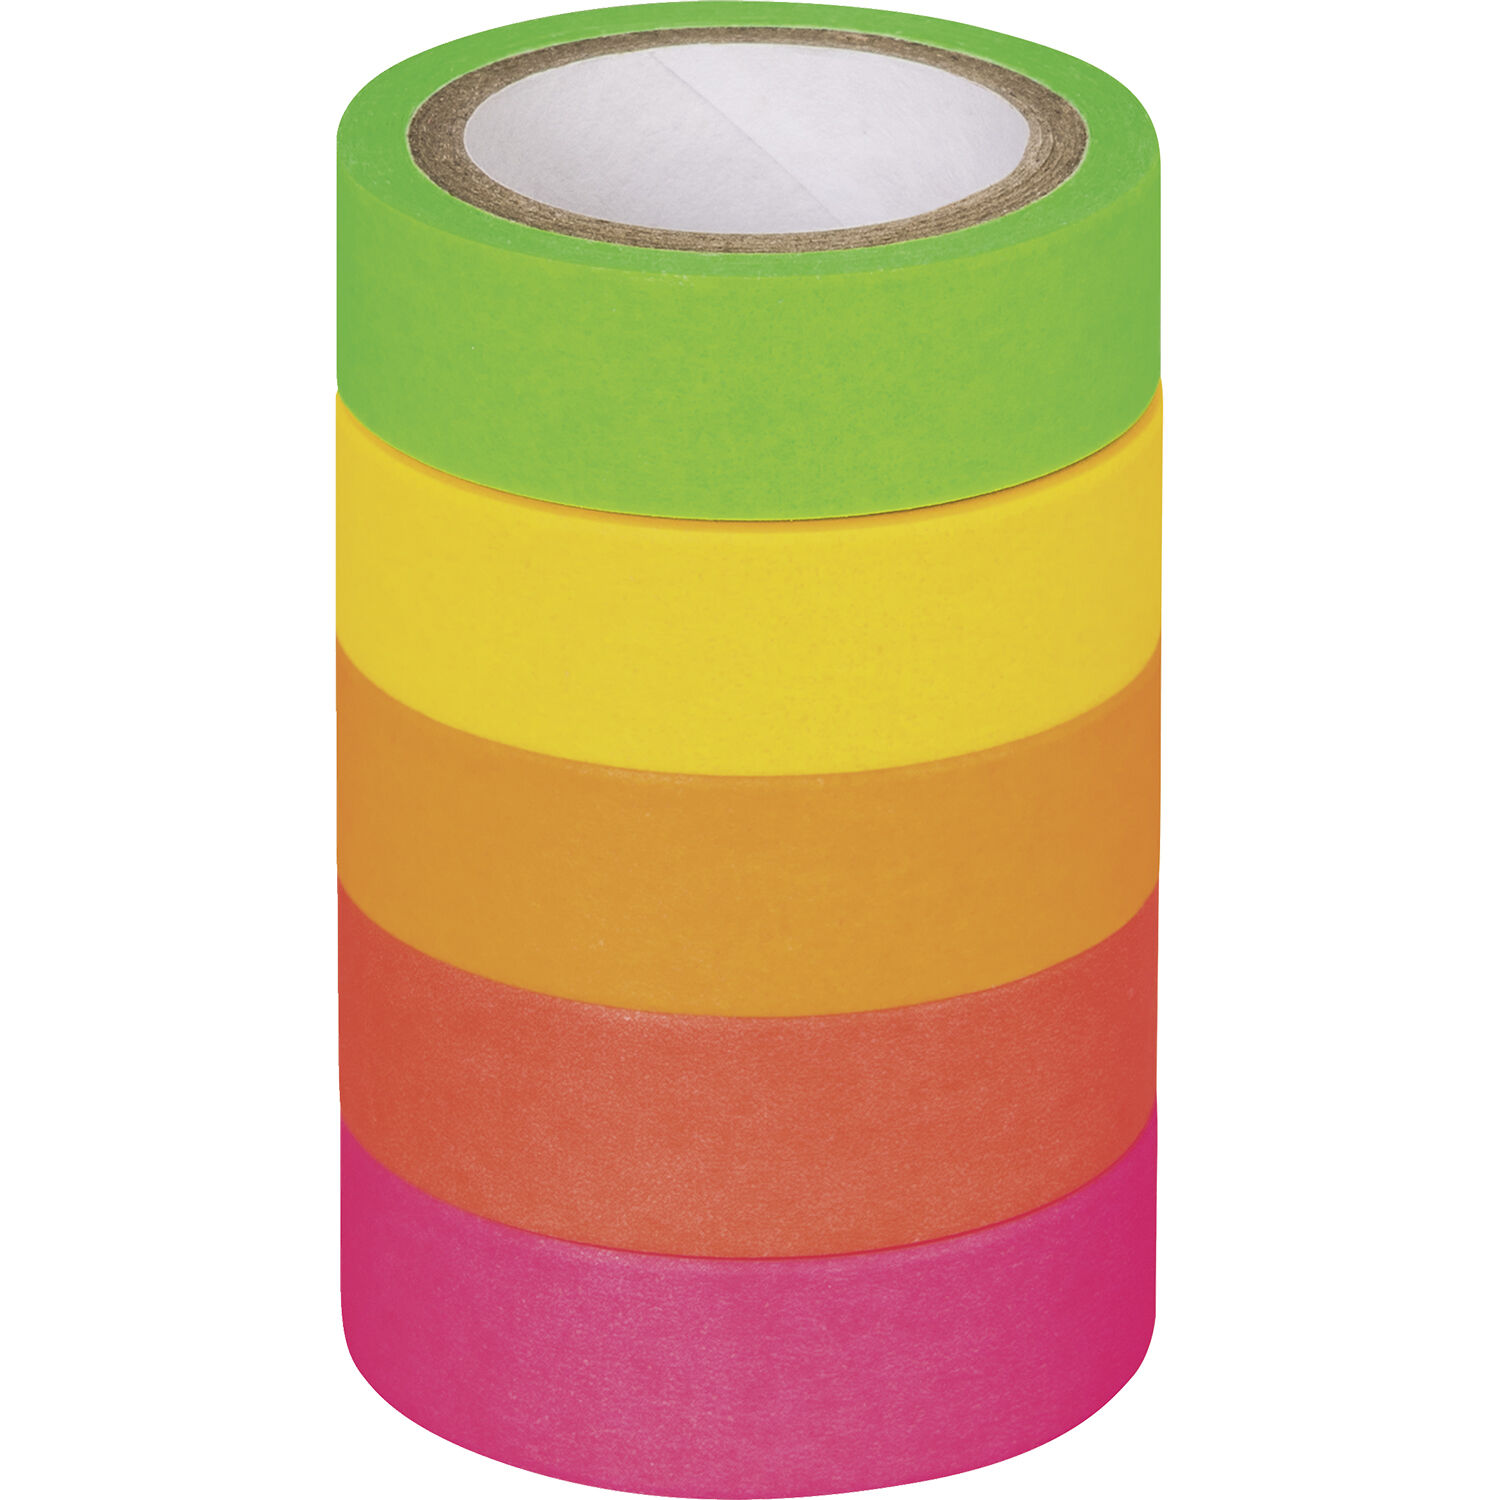 NEU Deko Tape / Klebeband, 5 Rollen, Neon Regenbogen Matt - Washi Tape,  Fabric- & Glitter-Tape Klebeband, Sticker & Co. Papiere & Co. Produkte 